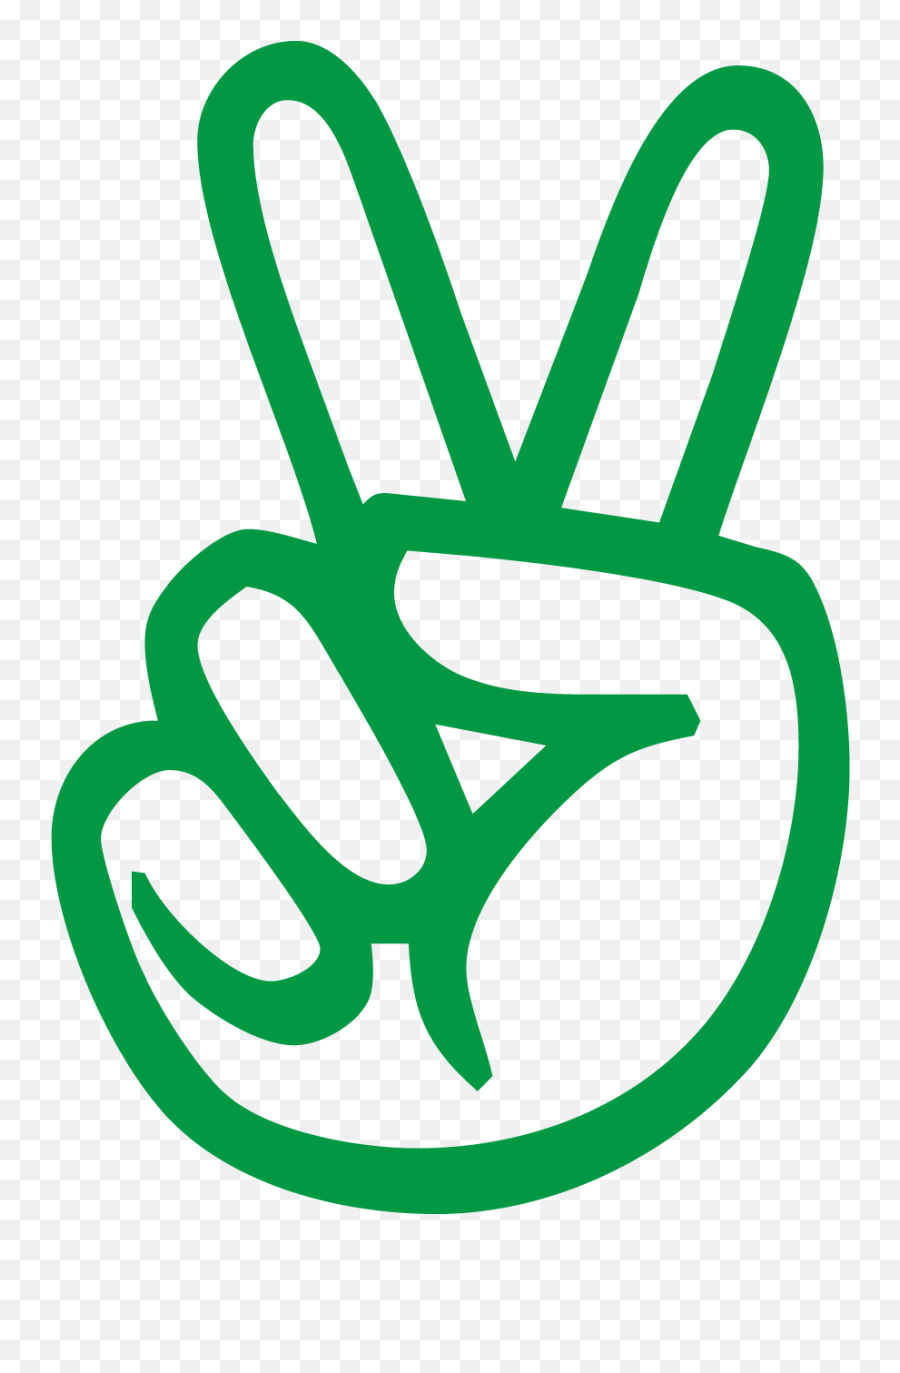 Peace Symbols Hand V Sign - Animated Peace Sign Hand Emoji,Peace Sign Hand Emoji